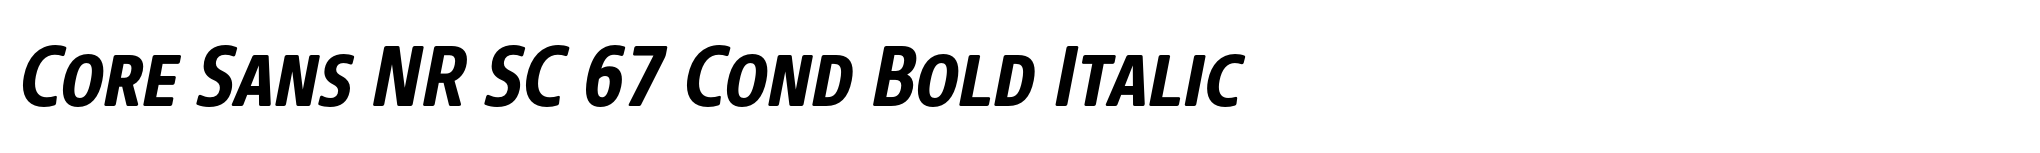 Core Sans NR SC 67 Cond Bold Italic image